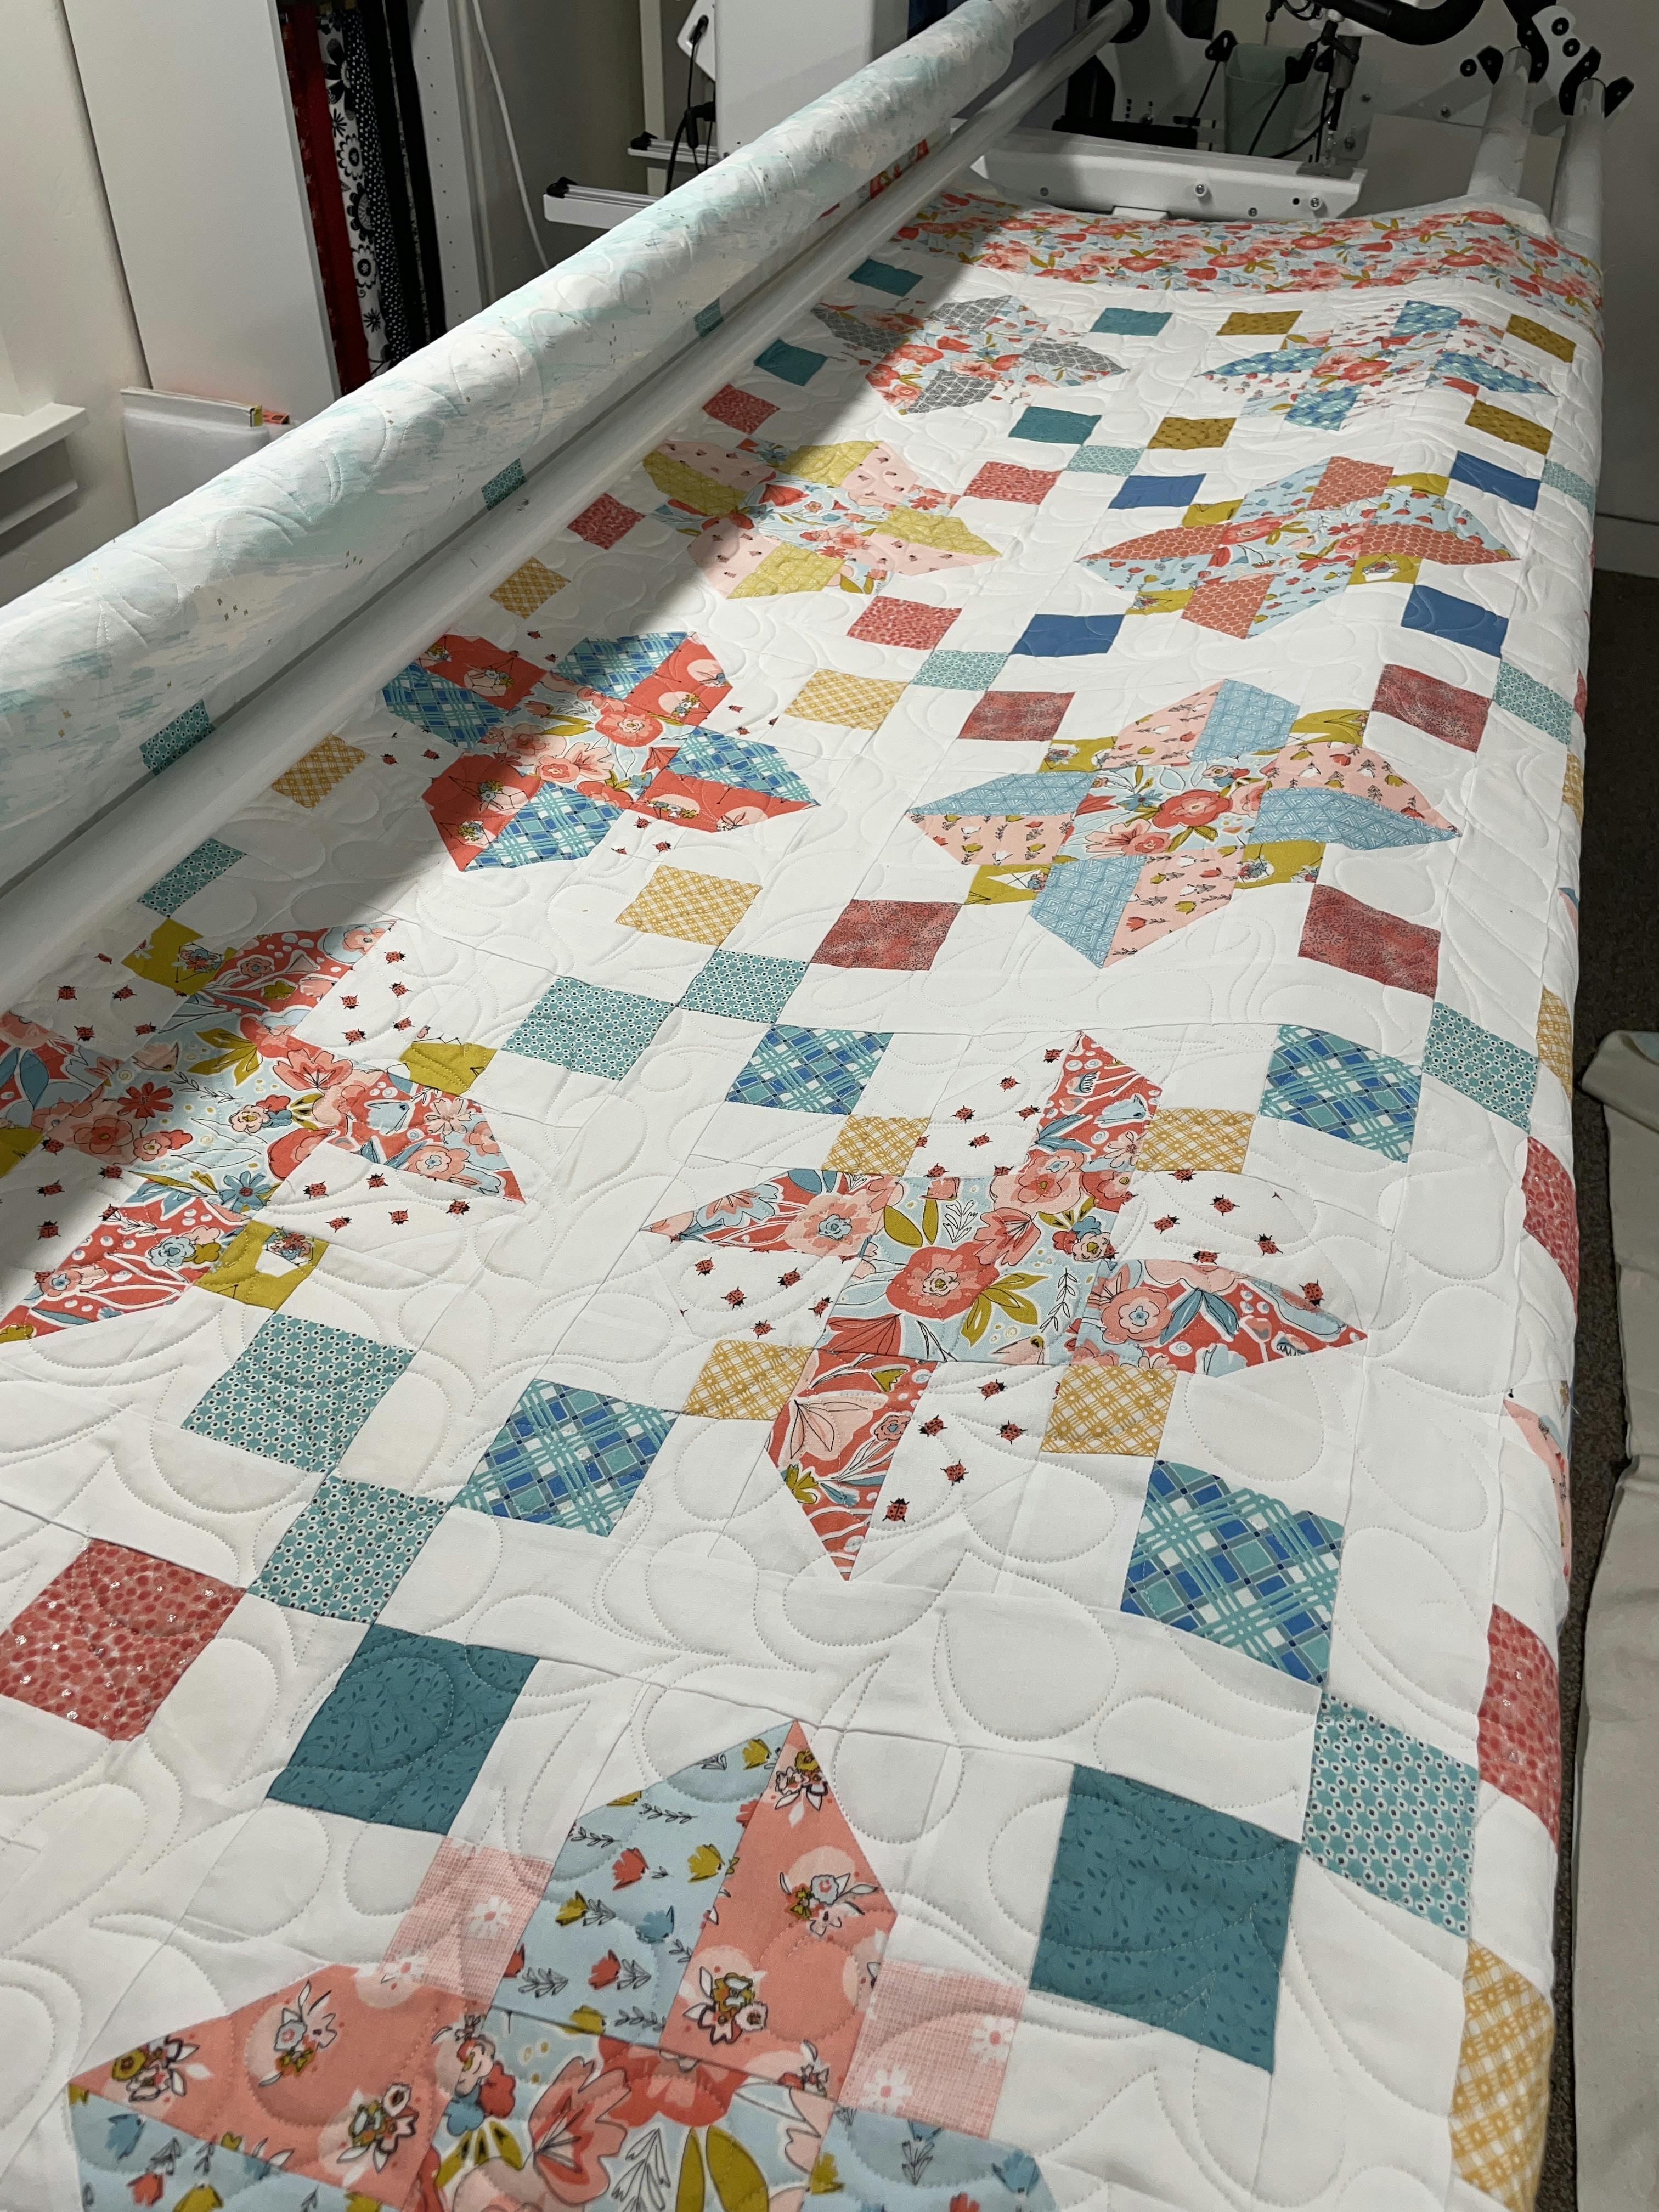 Pieced 91 x 107” Queen sized Floral quilt/blanket